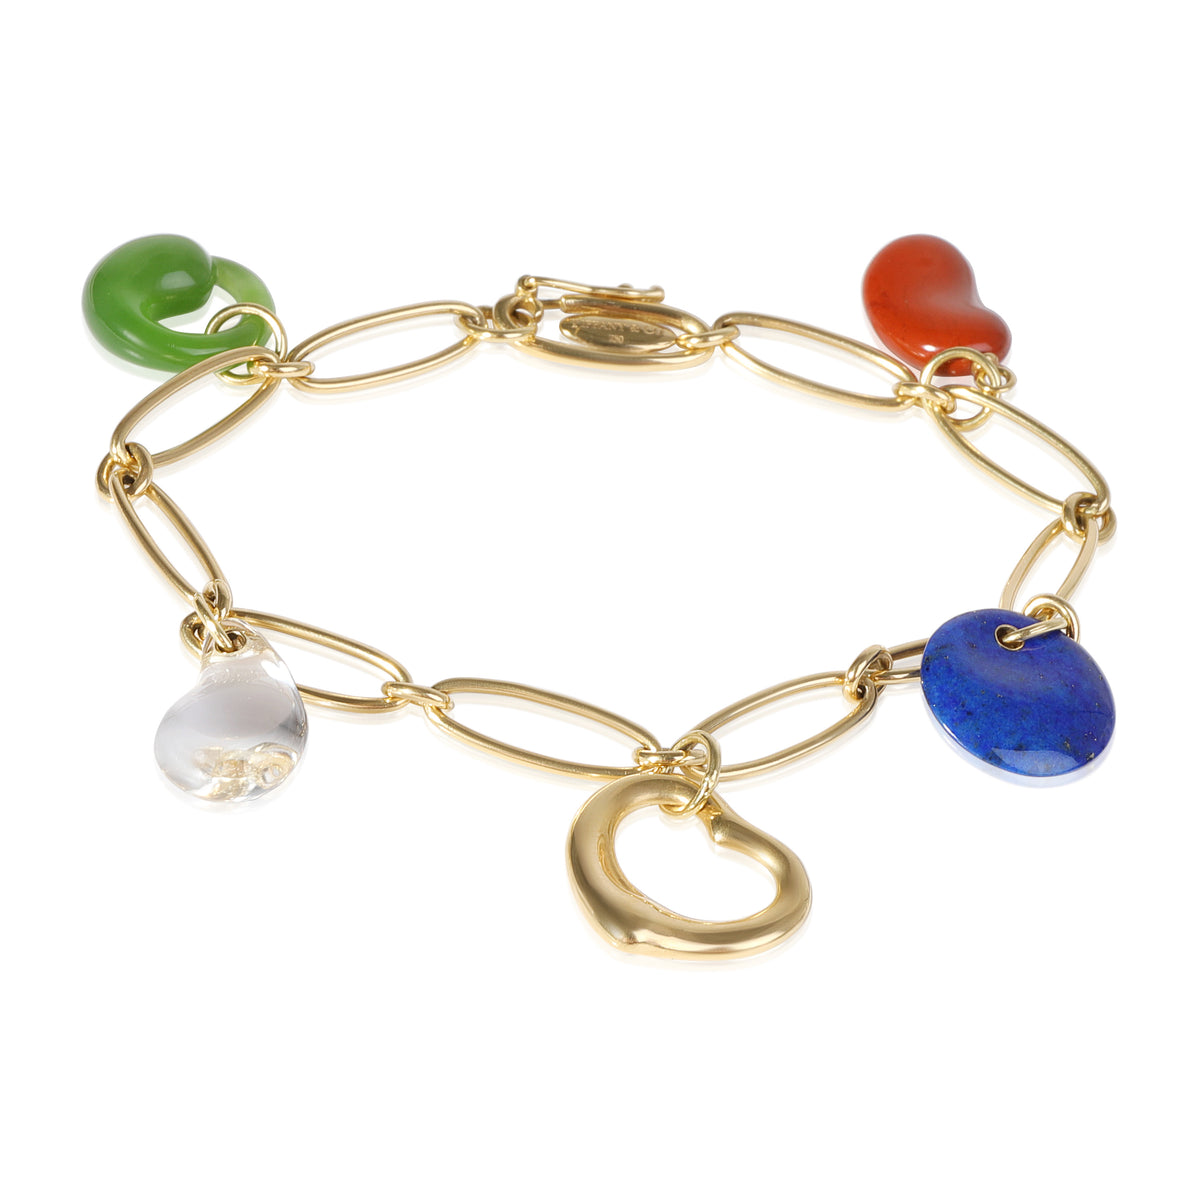 Tiffany & Co. Elsa Peretti Charm Bracelet in 18k Yellow Gold